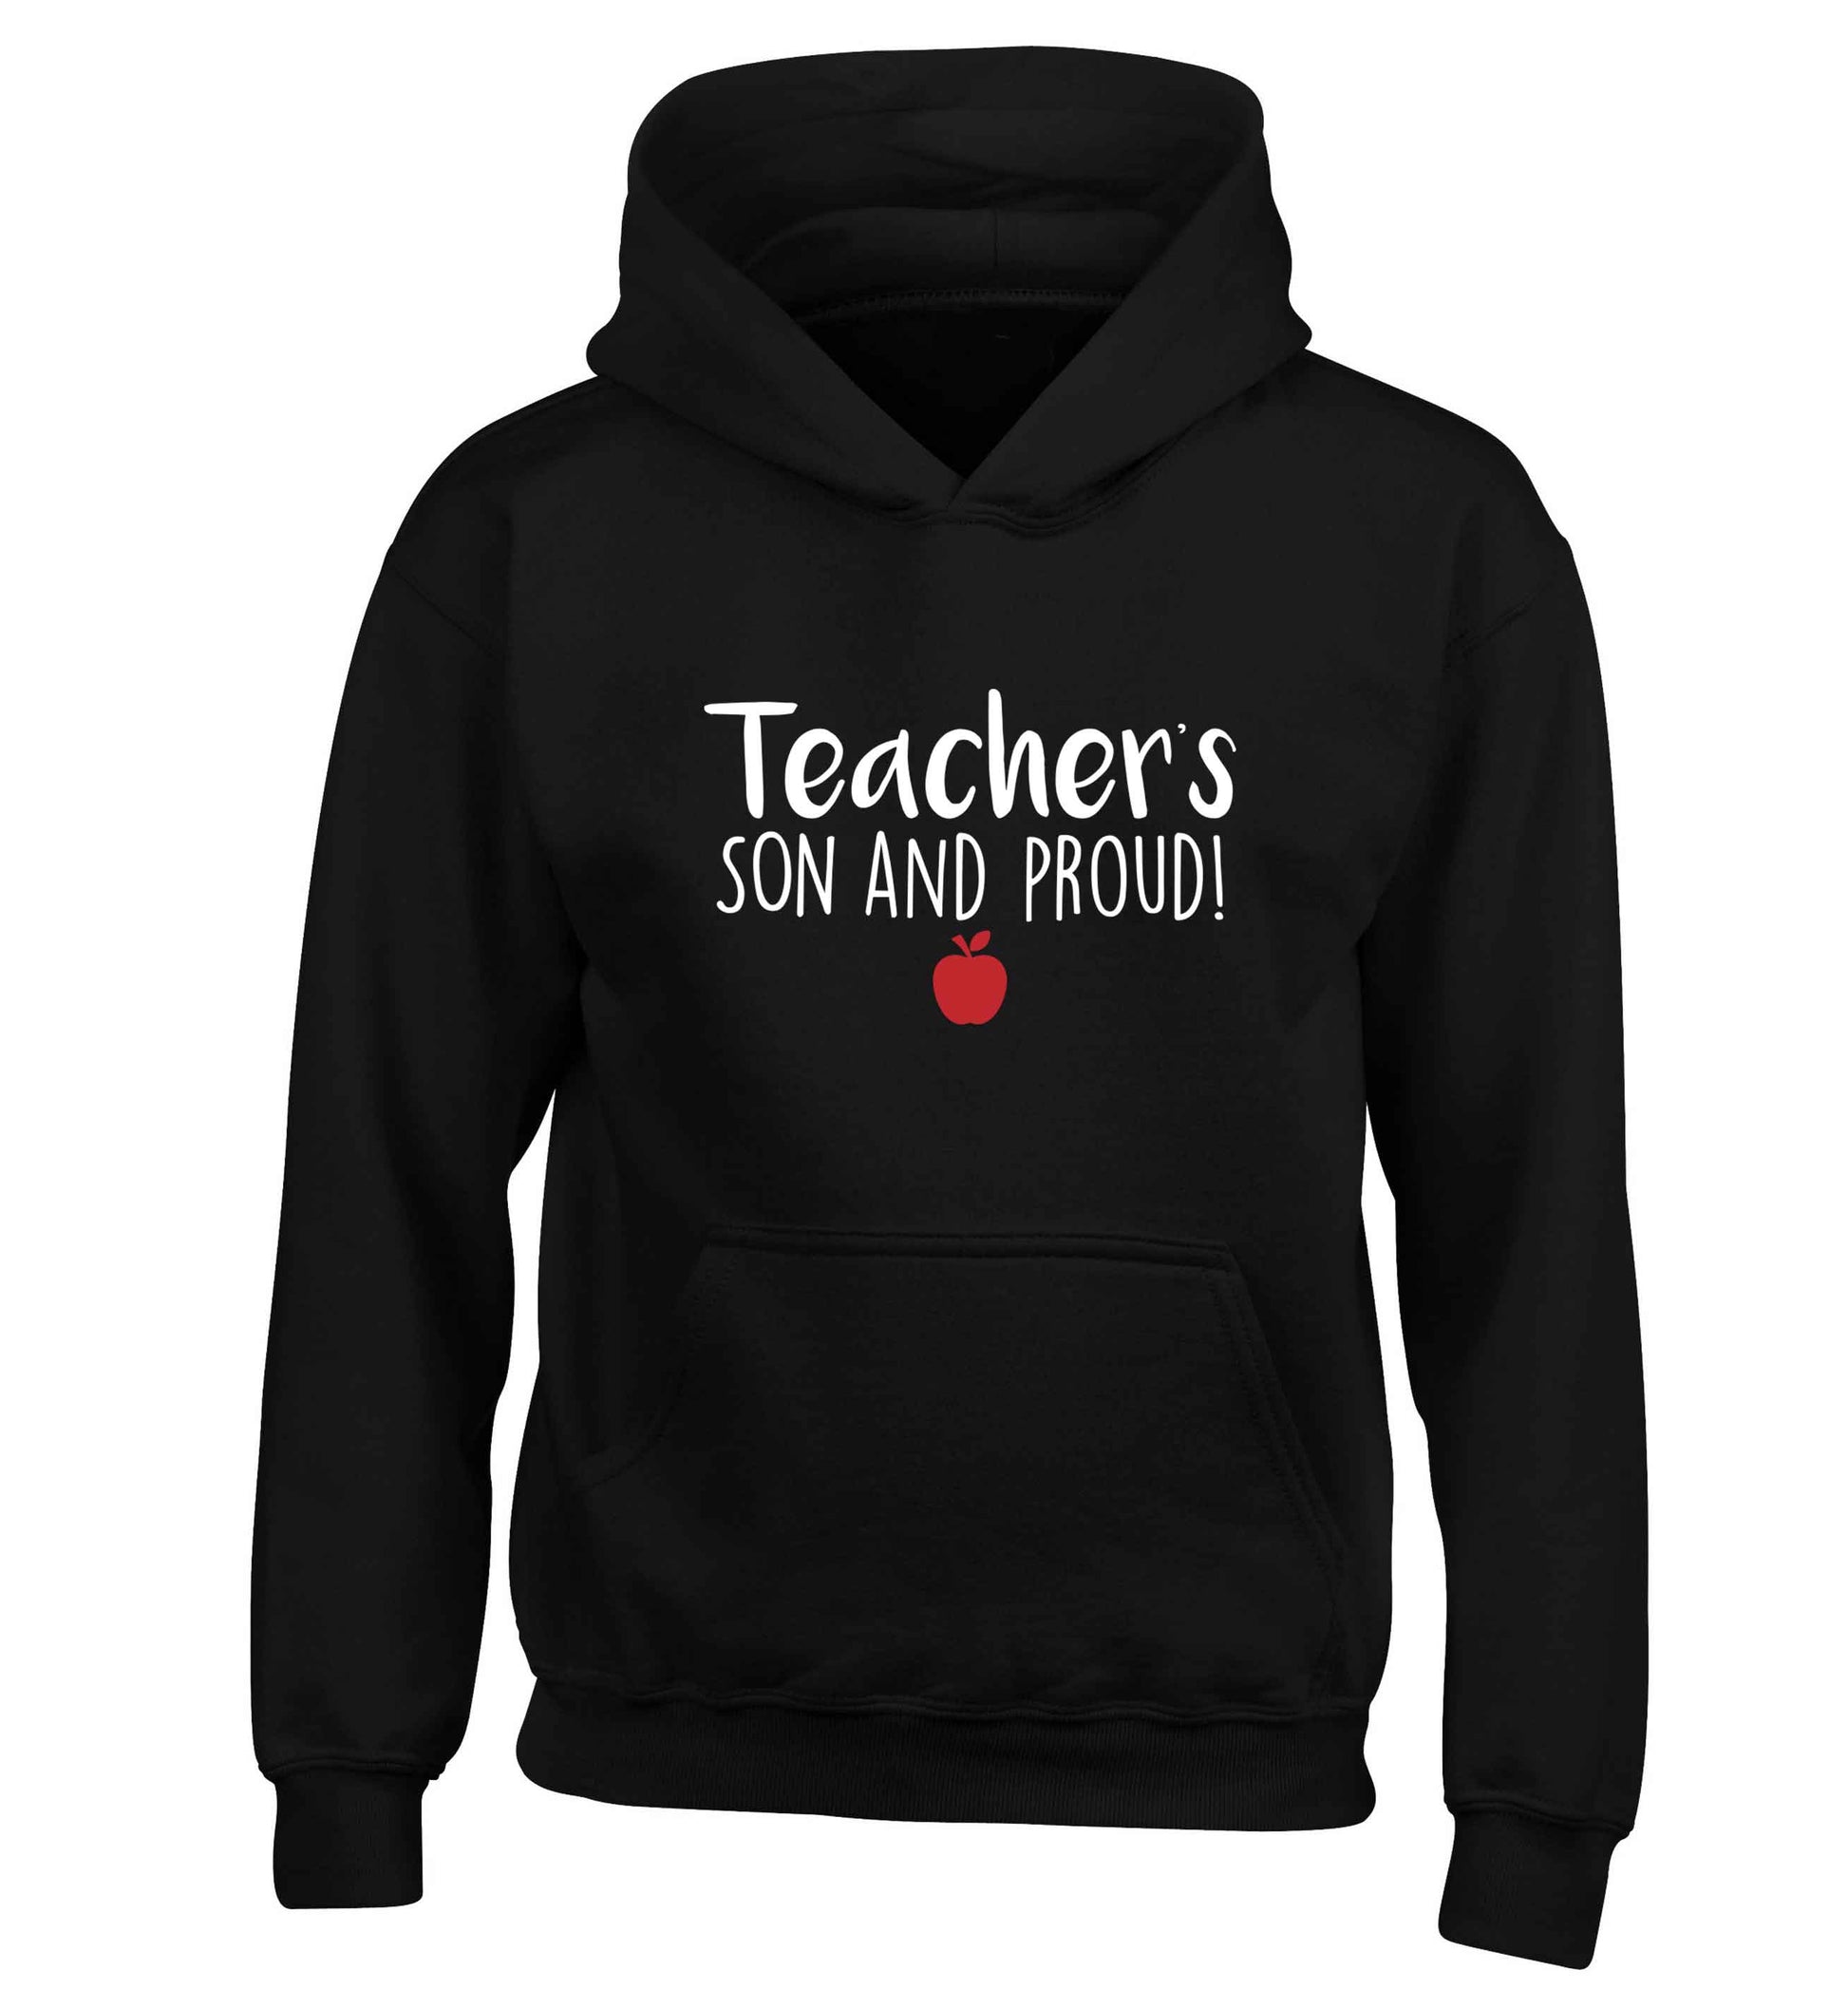 Teachers son and proud children's black hoodie 12-13 Years